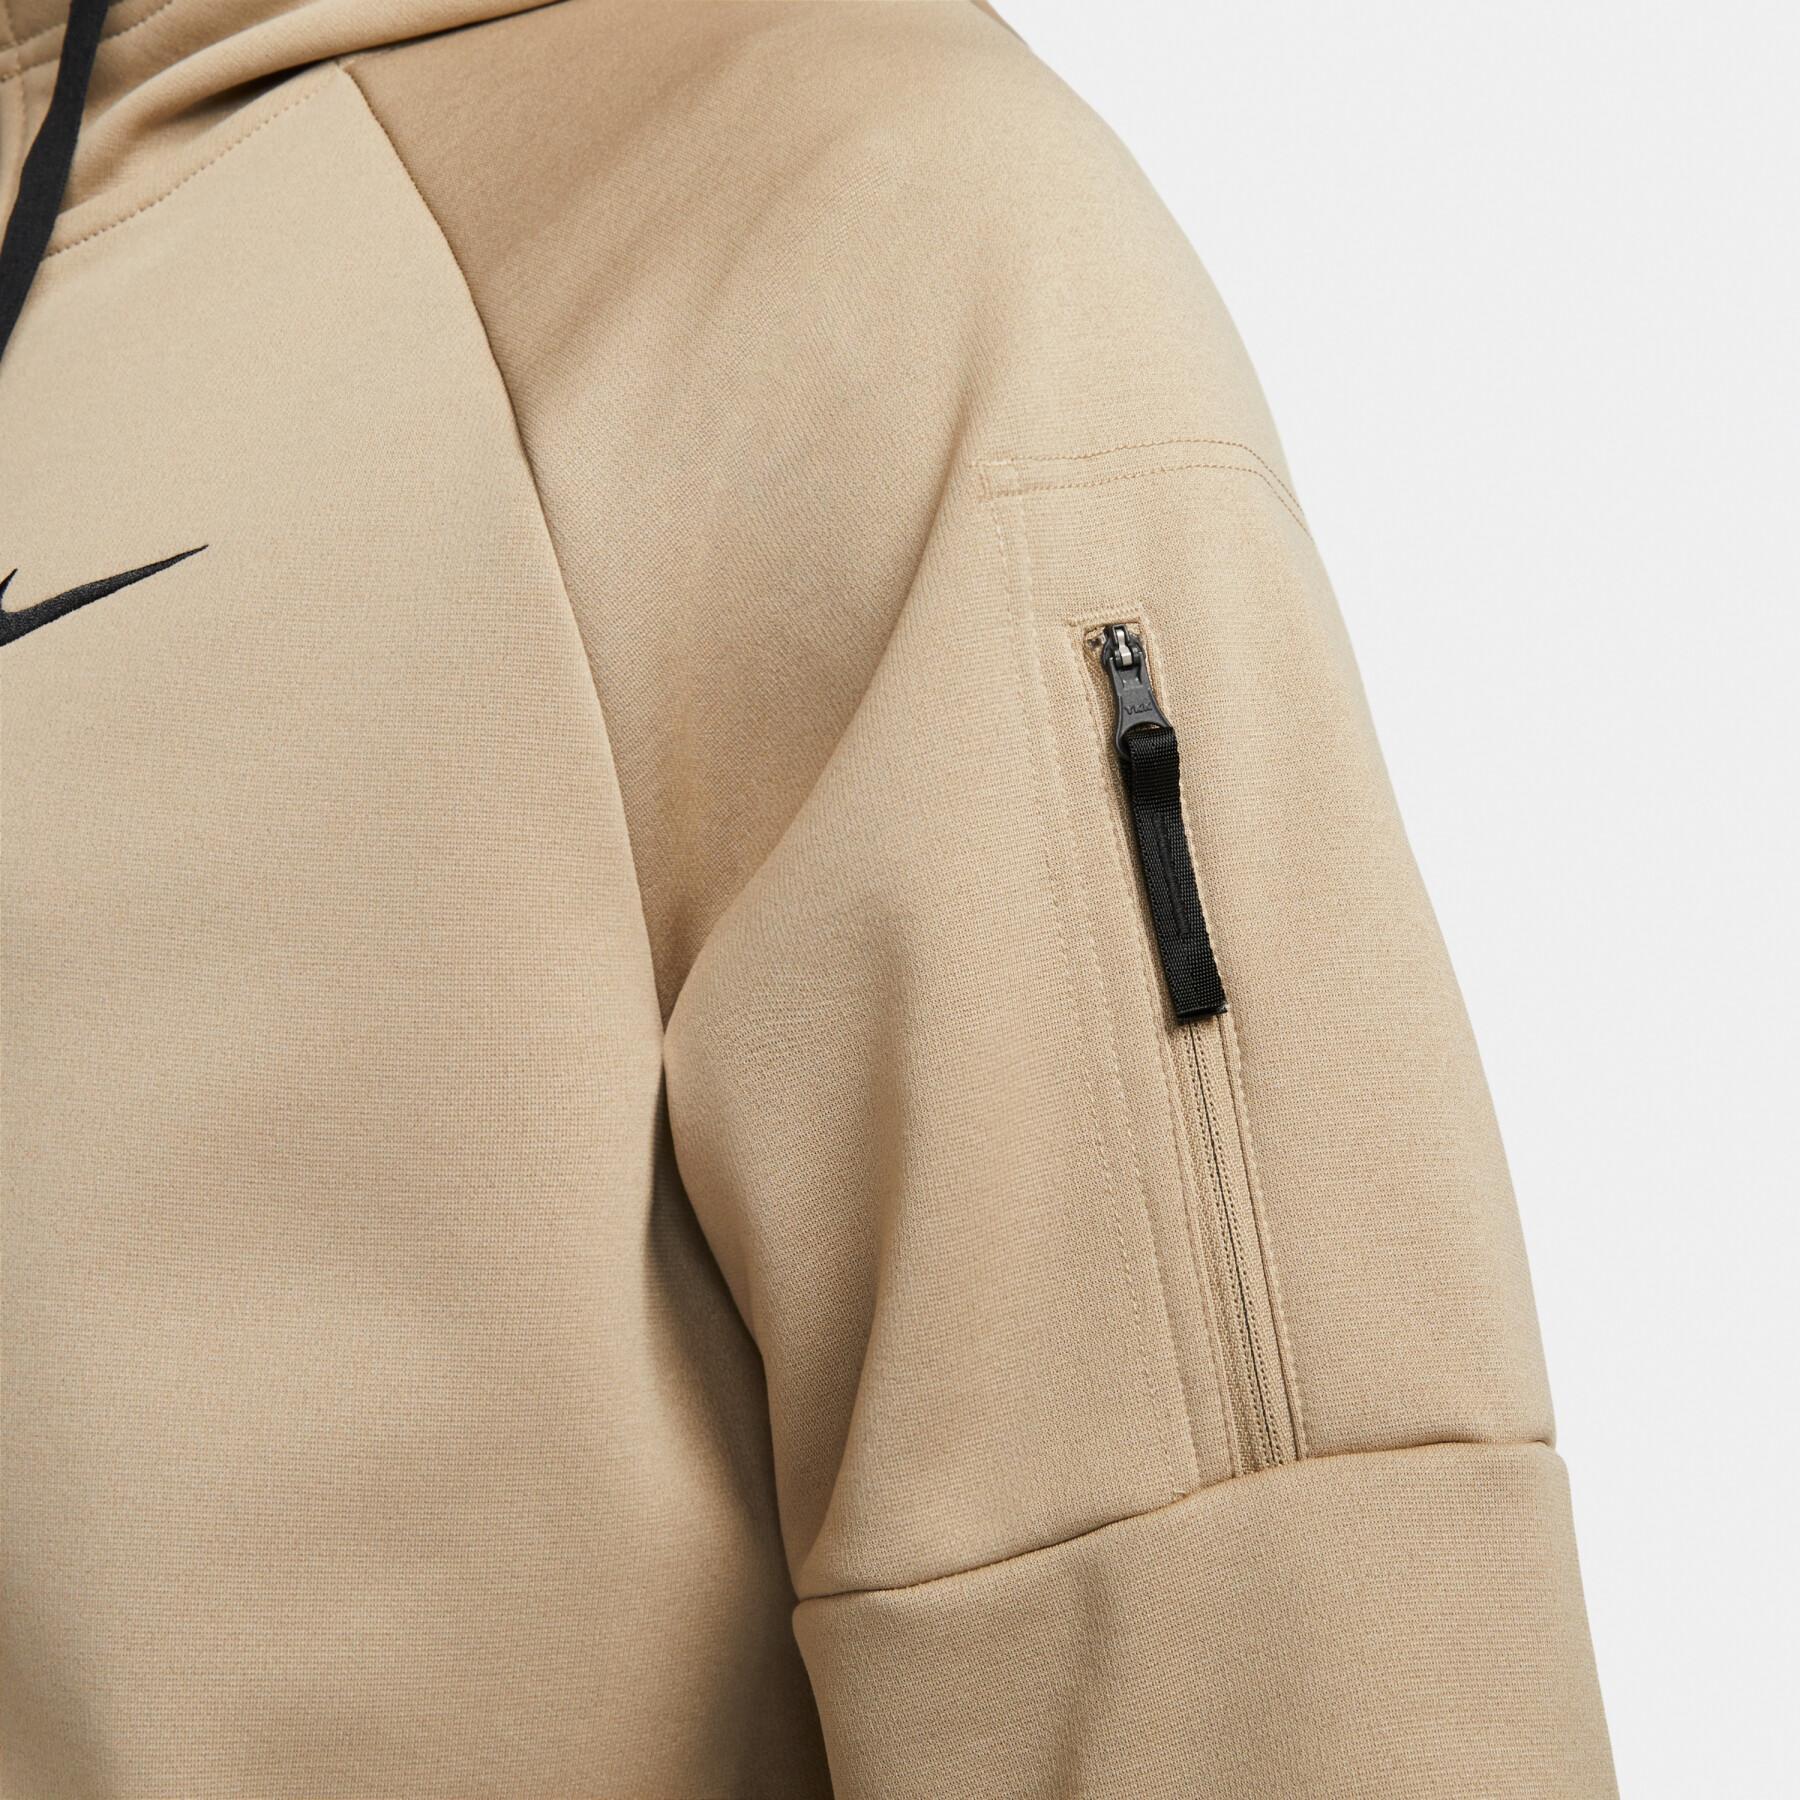 Kapuzen-Sweatshirt mit Reißverschluss Nike Therma-FIT